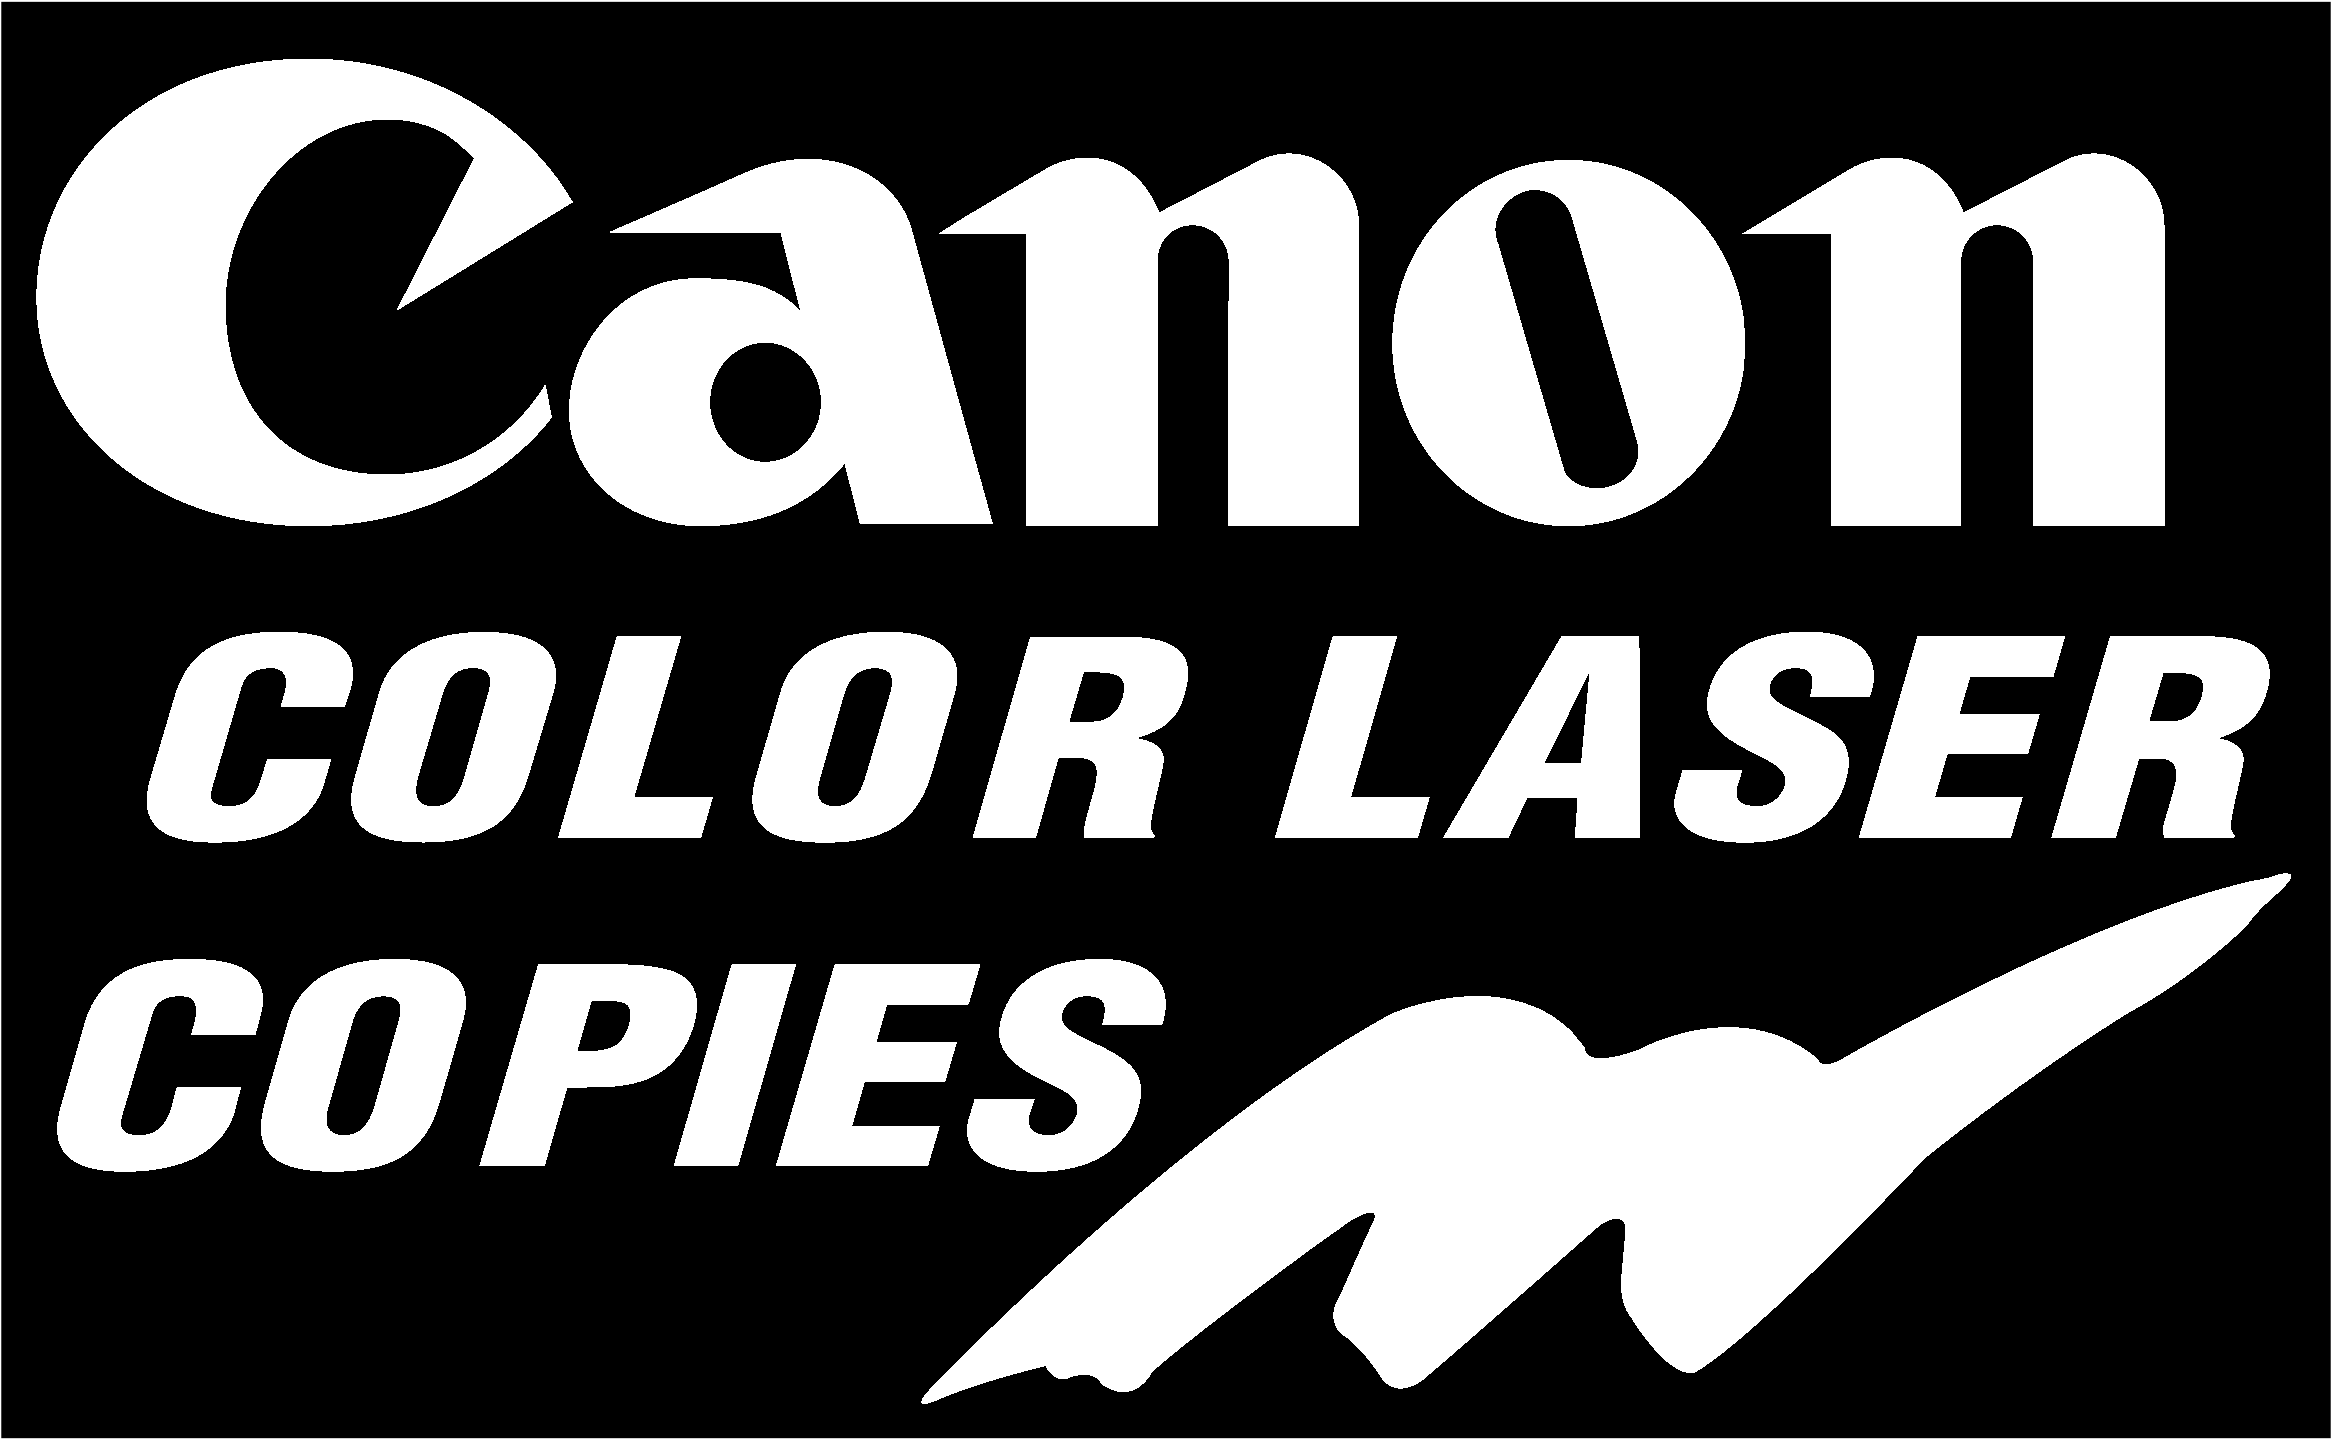 Canon Color Laser Copies Logo